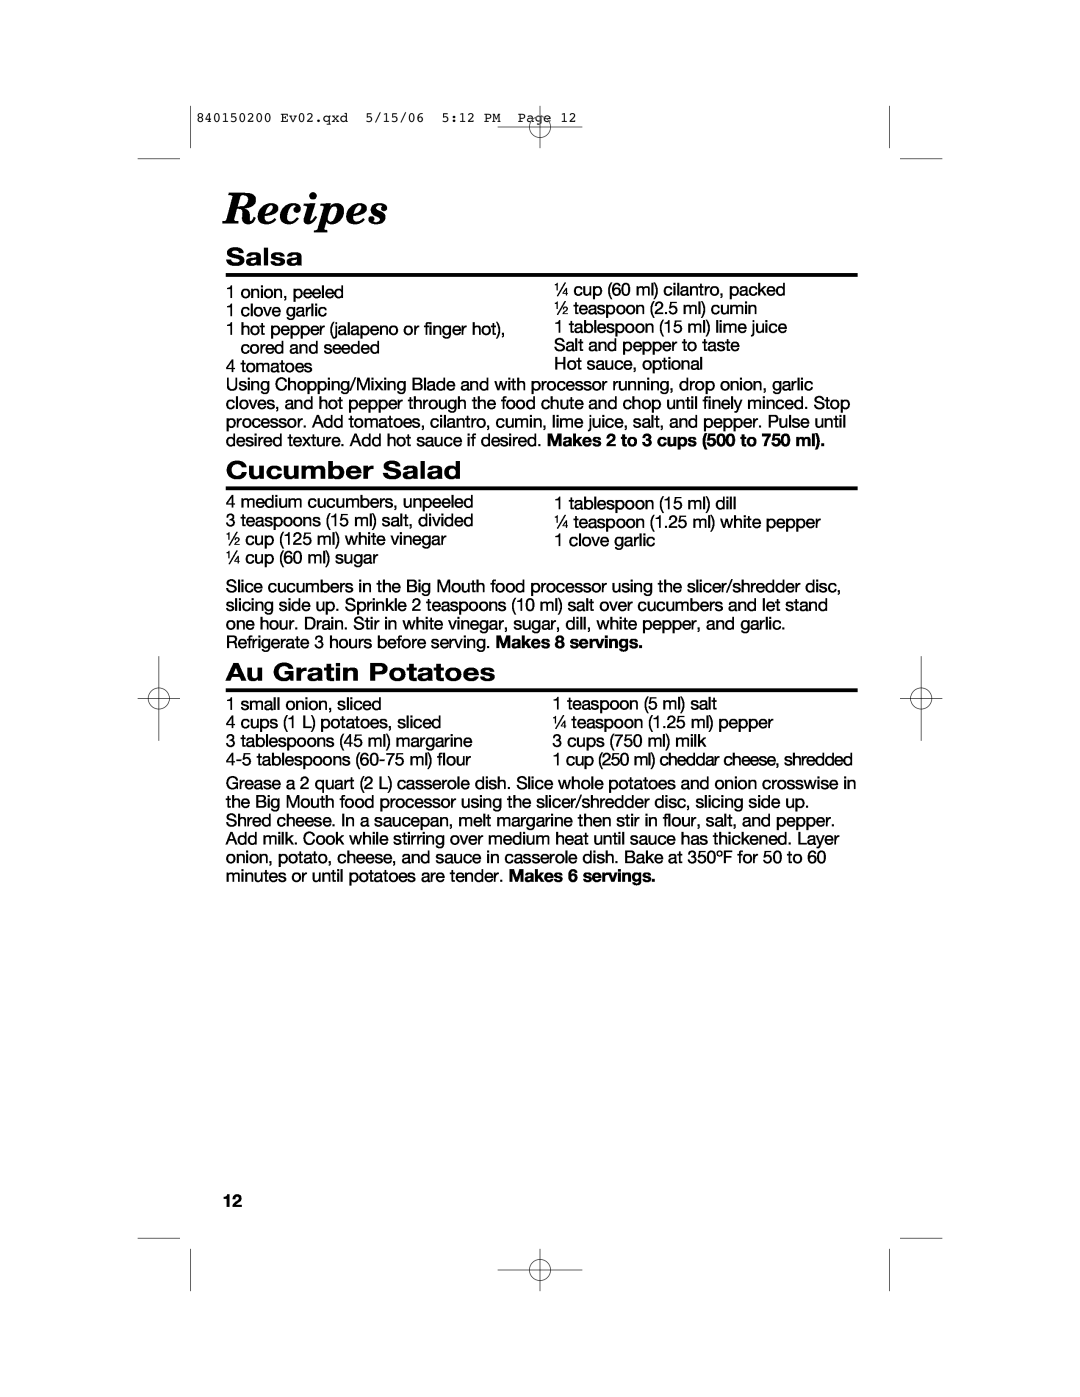 Proctor-Silex 840150200 manual Recipes, Salsa, Cucumber Salad, Au Gratin Potatoes 